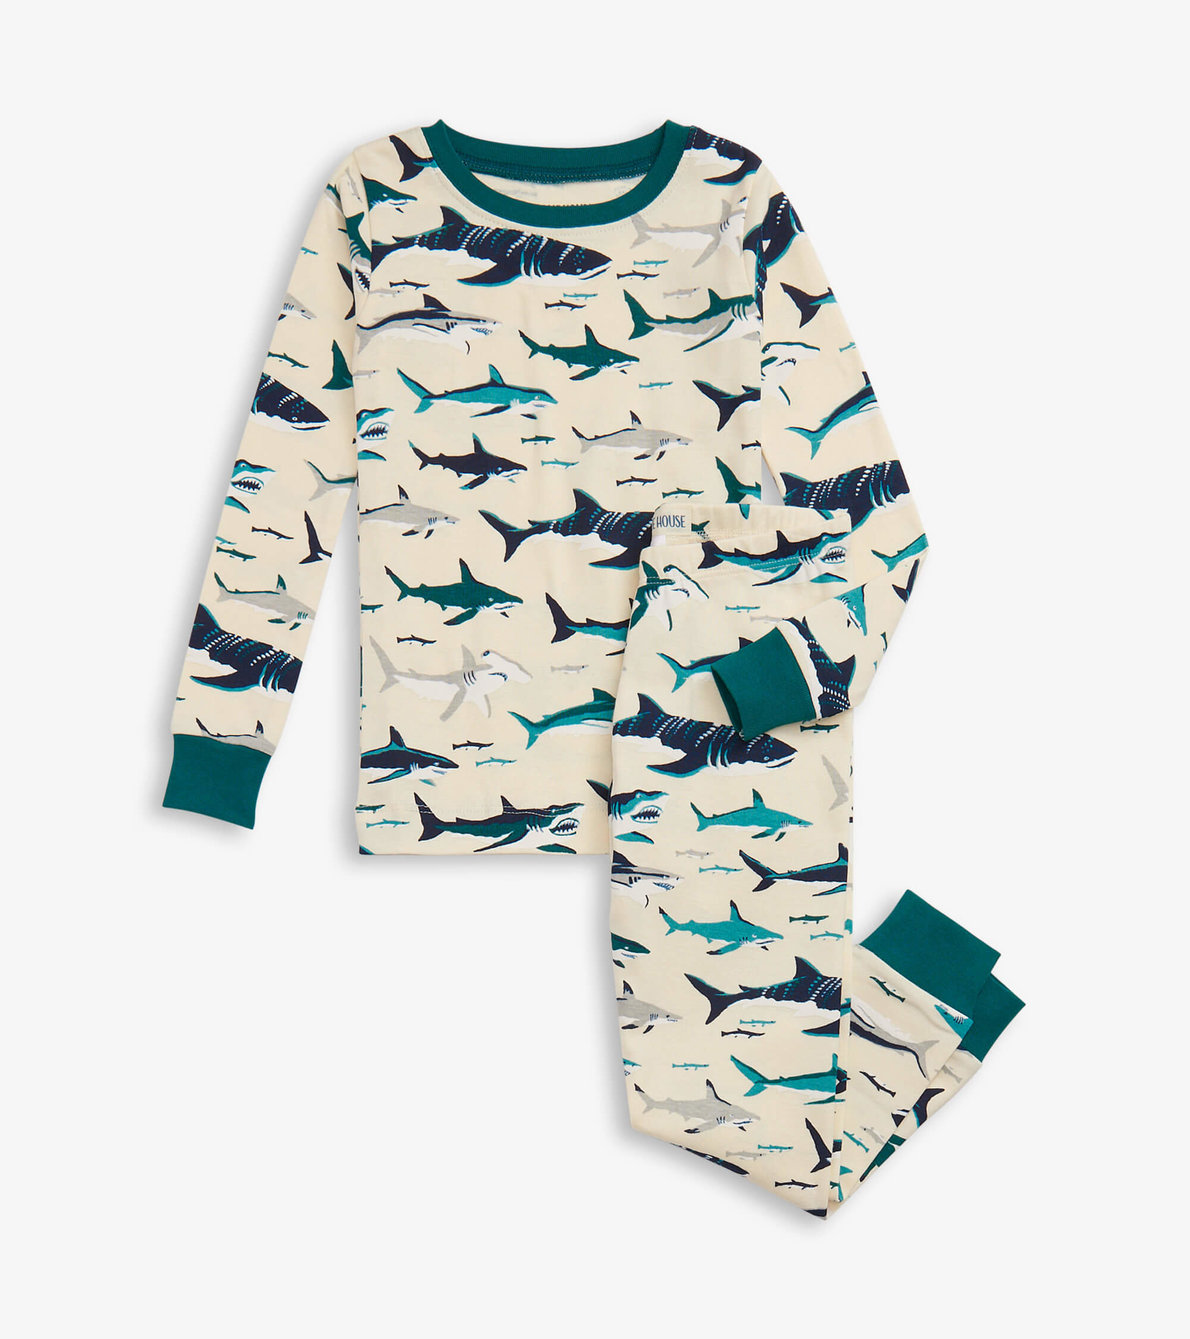 View larger image of Toothy Sharks Kids Pajama Set